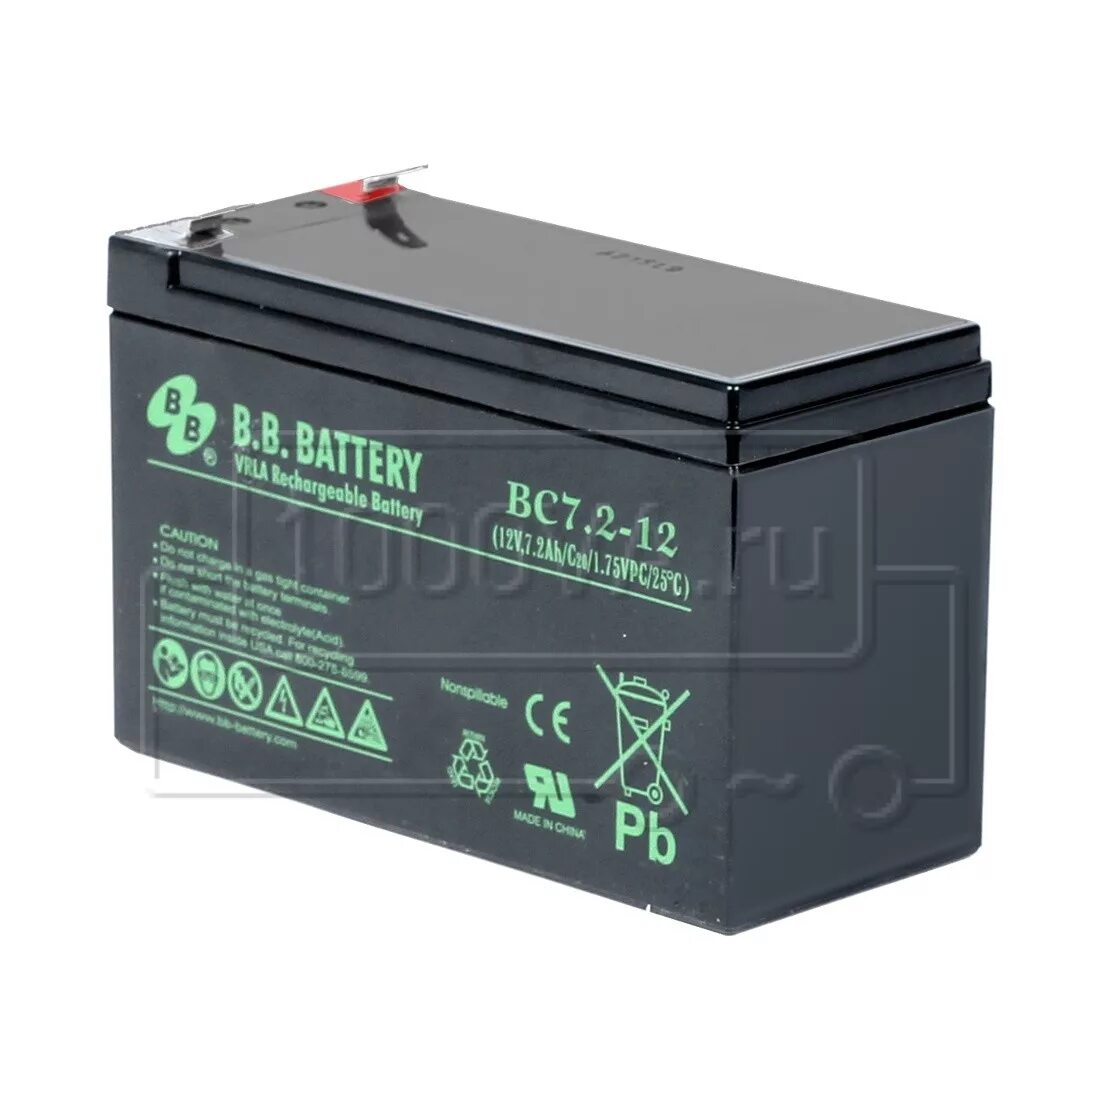 Аккумулятор BB Battery BC 7.2-12. Батарея BB Battery 12в. Аккумулятор vim АКБ 12 - 40. B.B. Battery BC7.2-12 12в 7.2 а·ч b.b. Battery. Battery bc 12 12